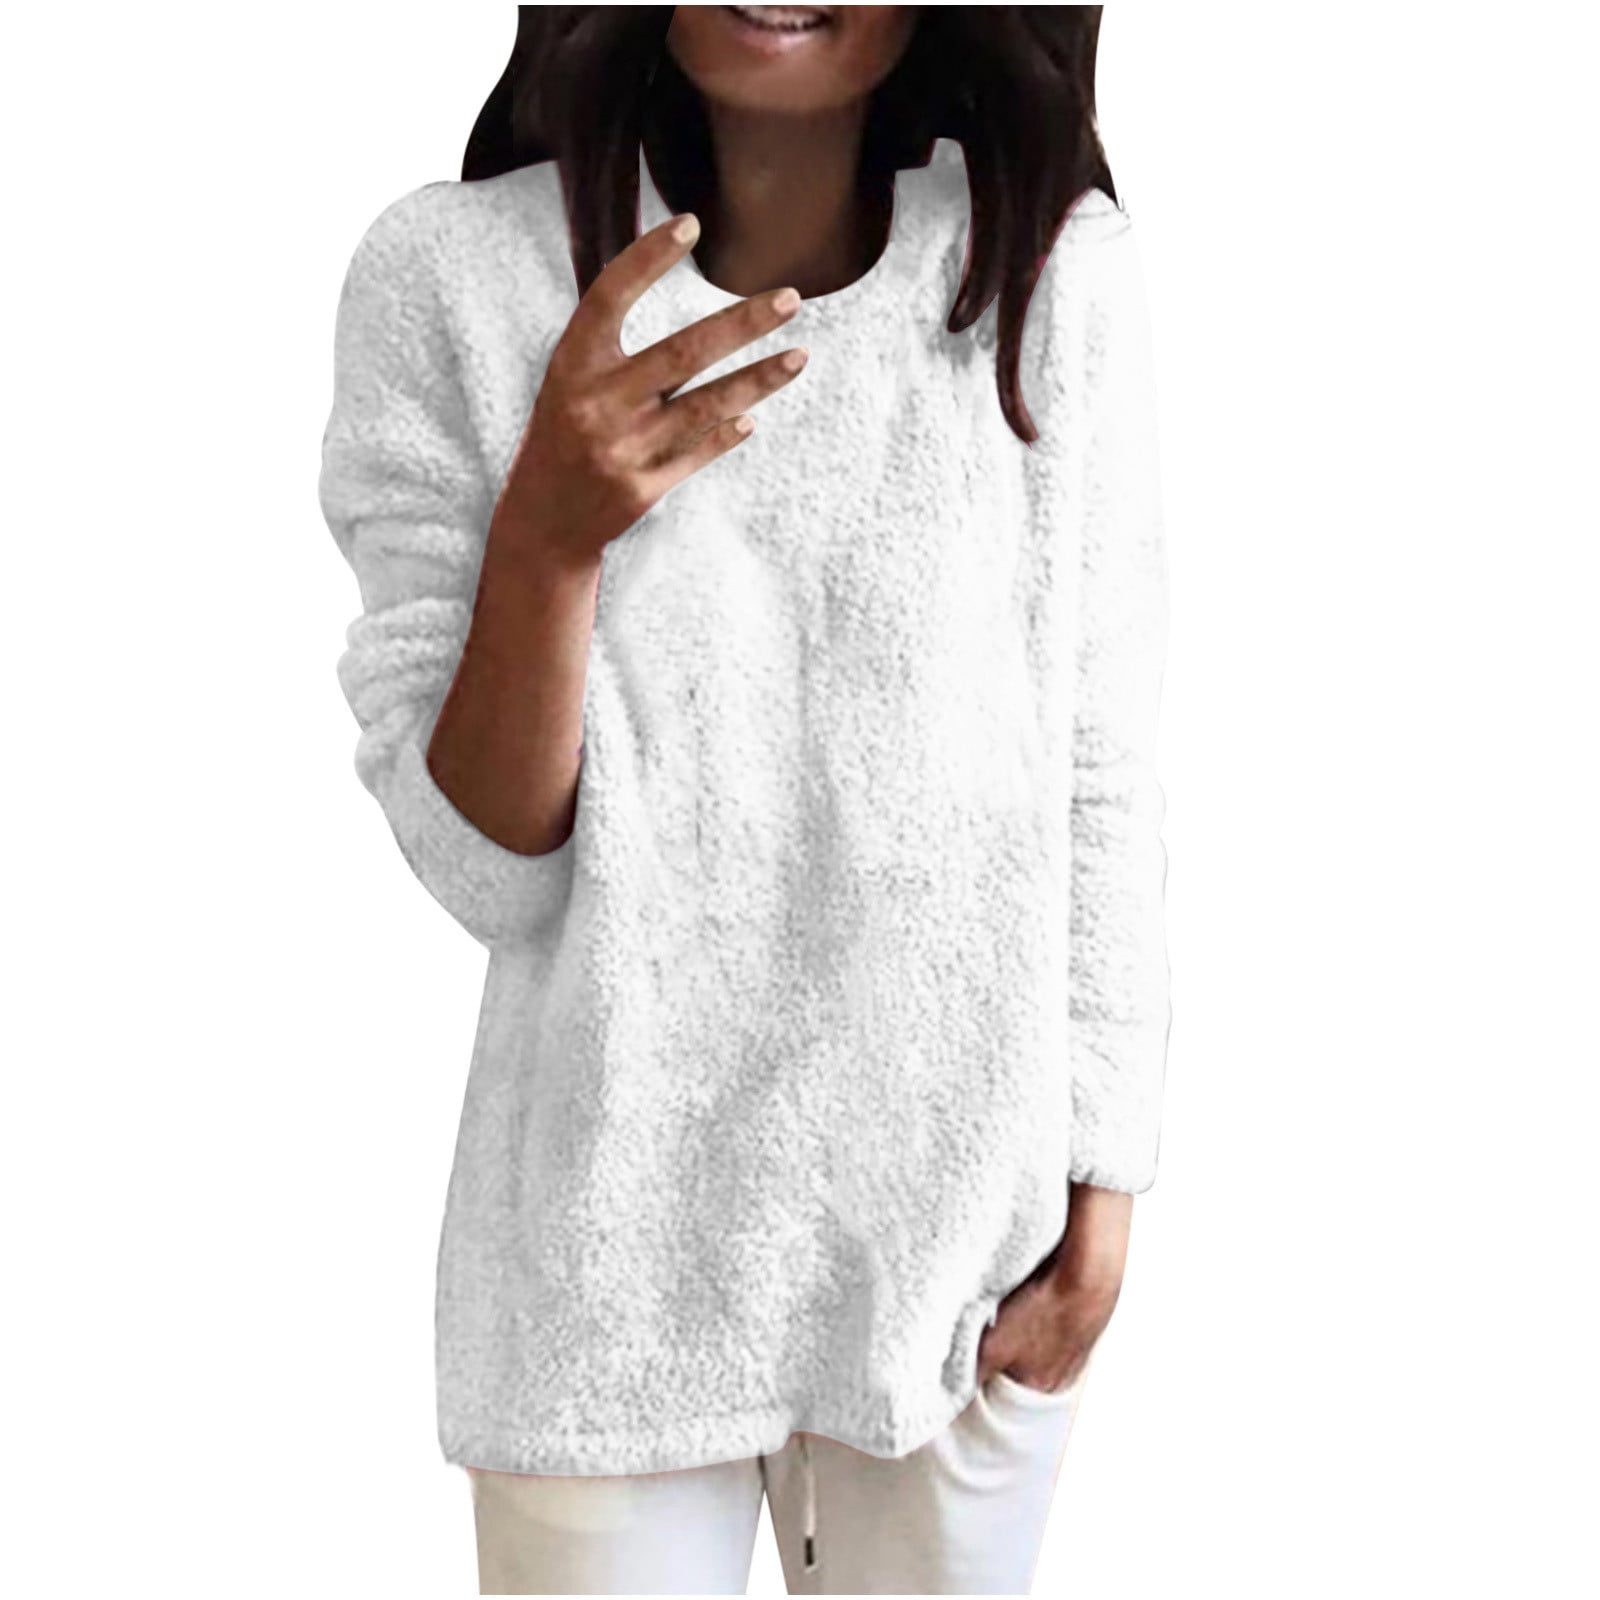 Fleece Tunic Sweater Tops for Women Winter Warm Plus Size Thermal